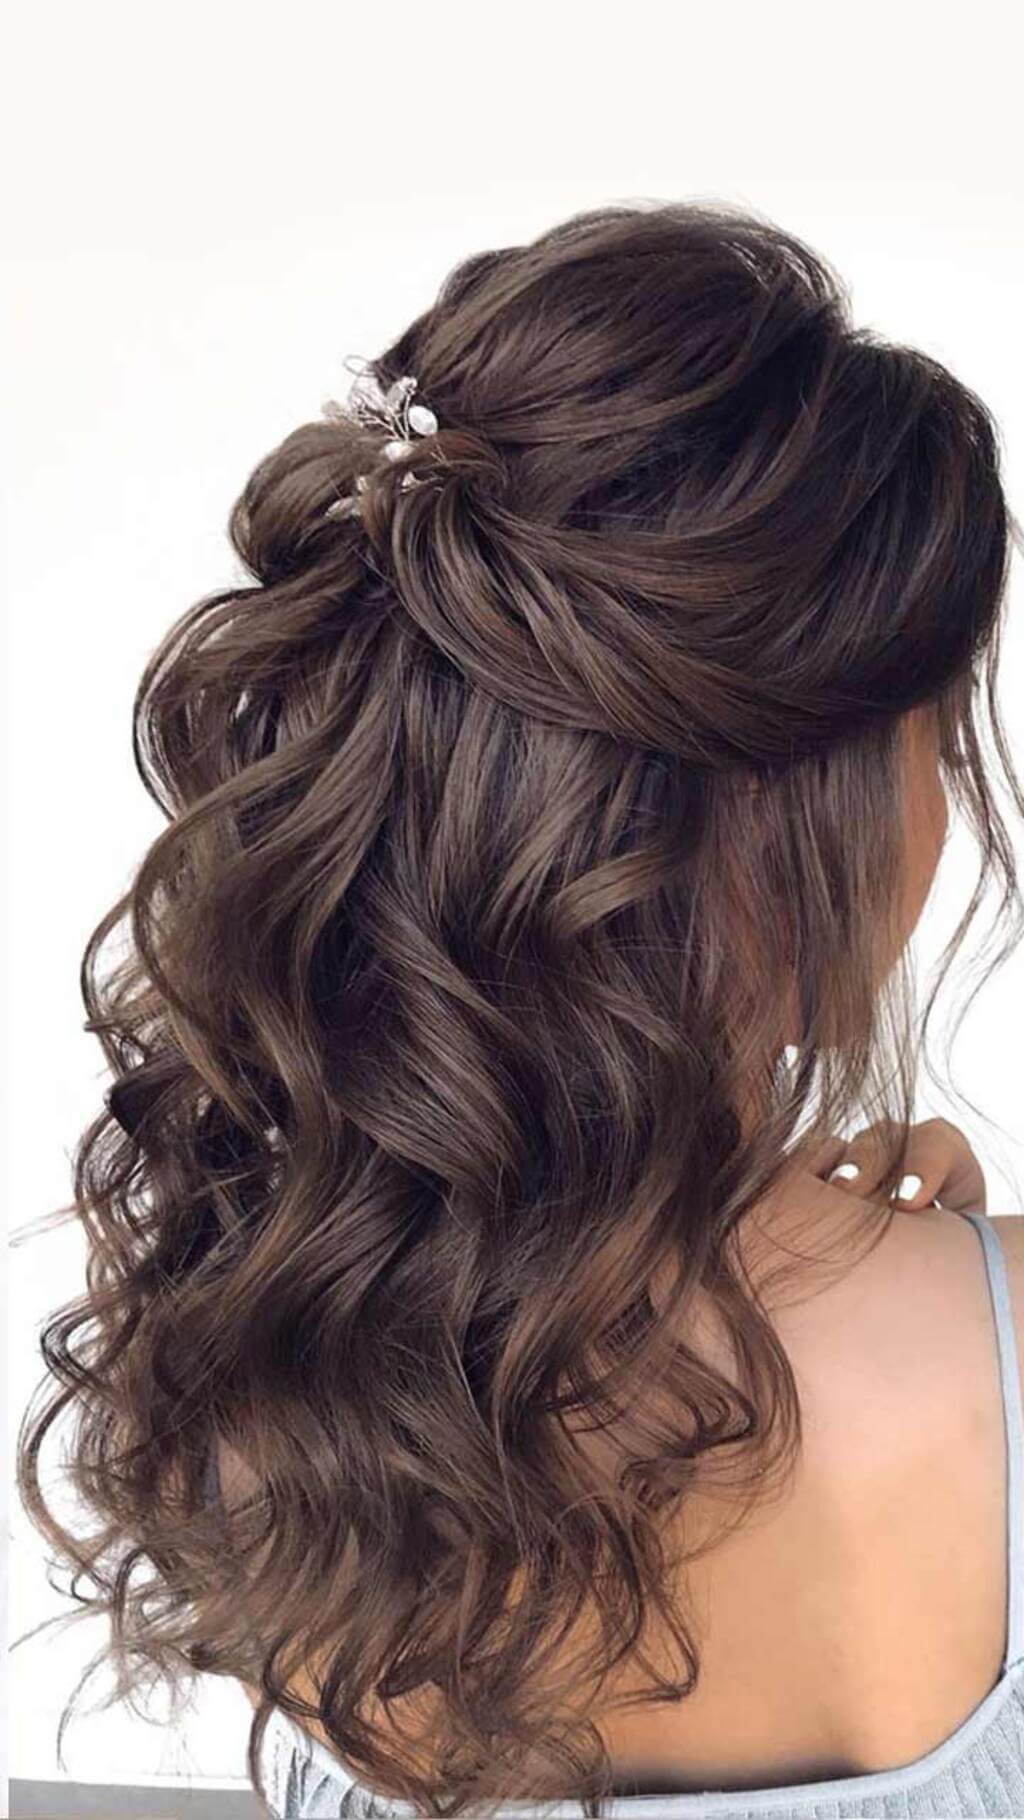 50 Stylish Half Up Half Down Wedding Hairstyle Ideas for Brides